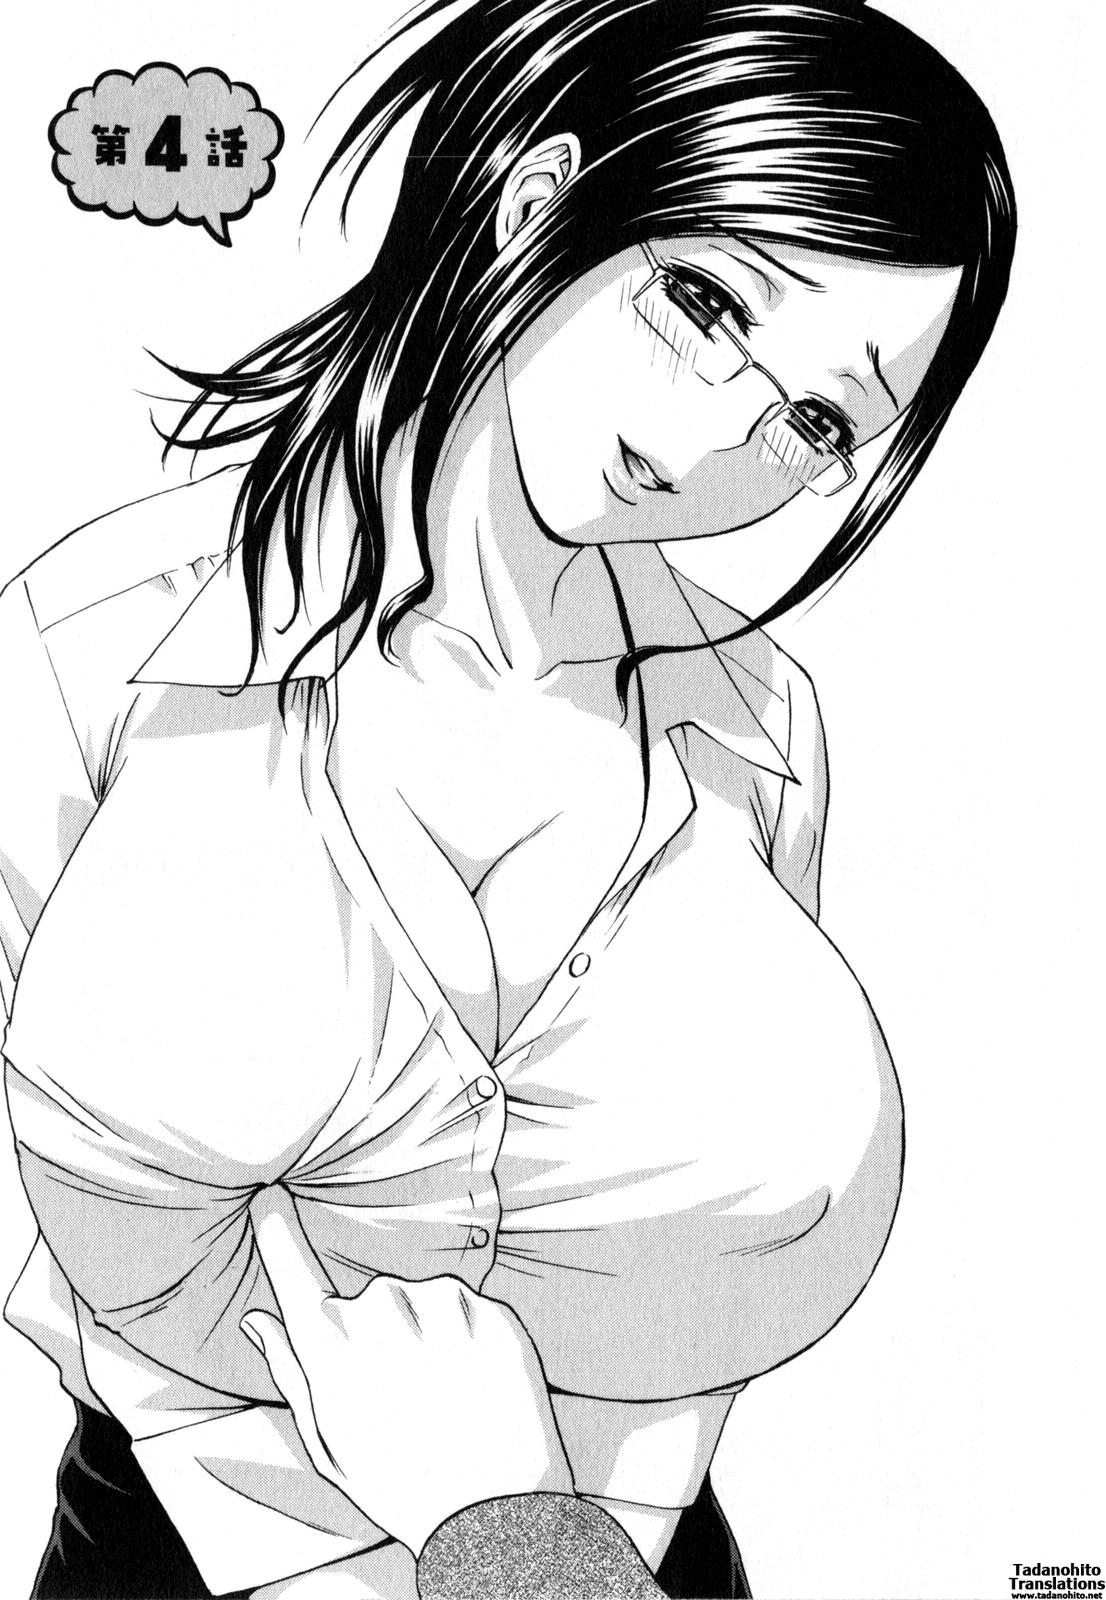 [Hidemaru] Life with Married Women Just Like a Manga 2 - Ch. 1-6 [English] {Tadanohito} 67